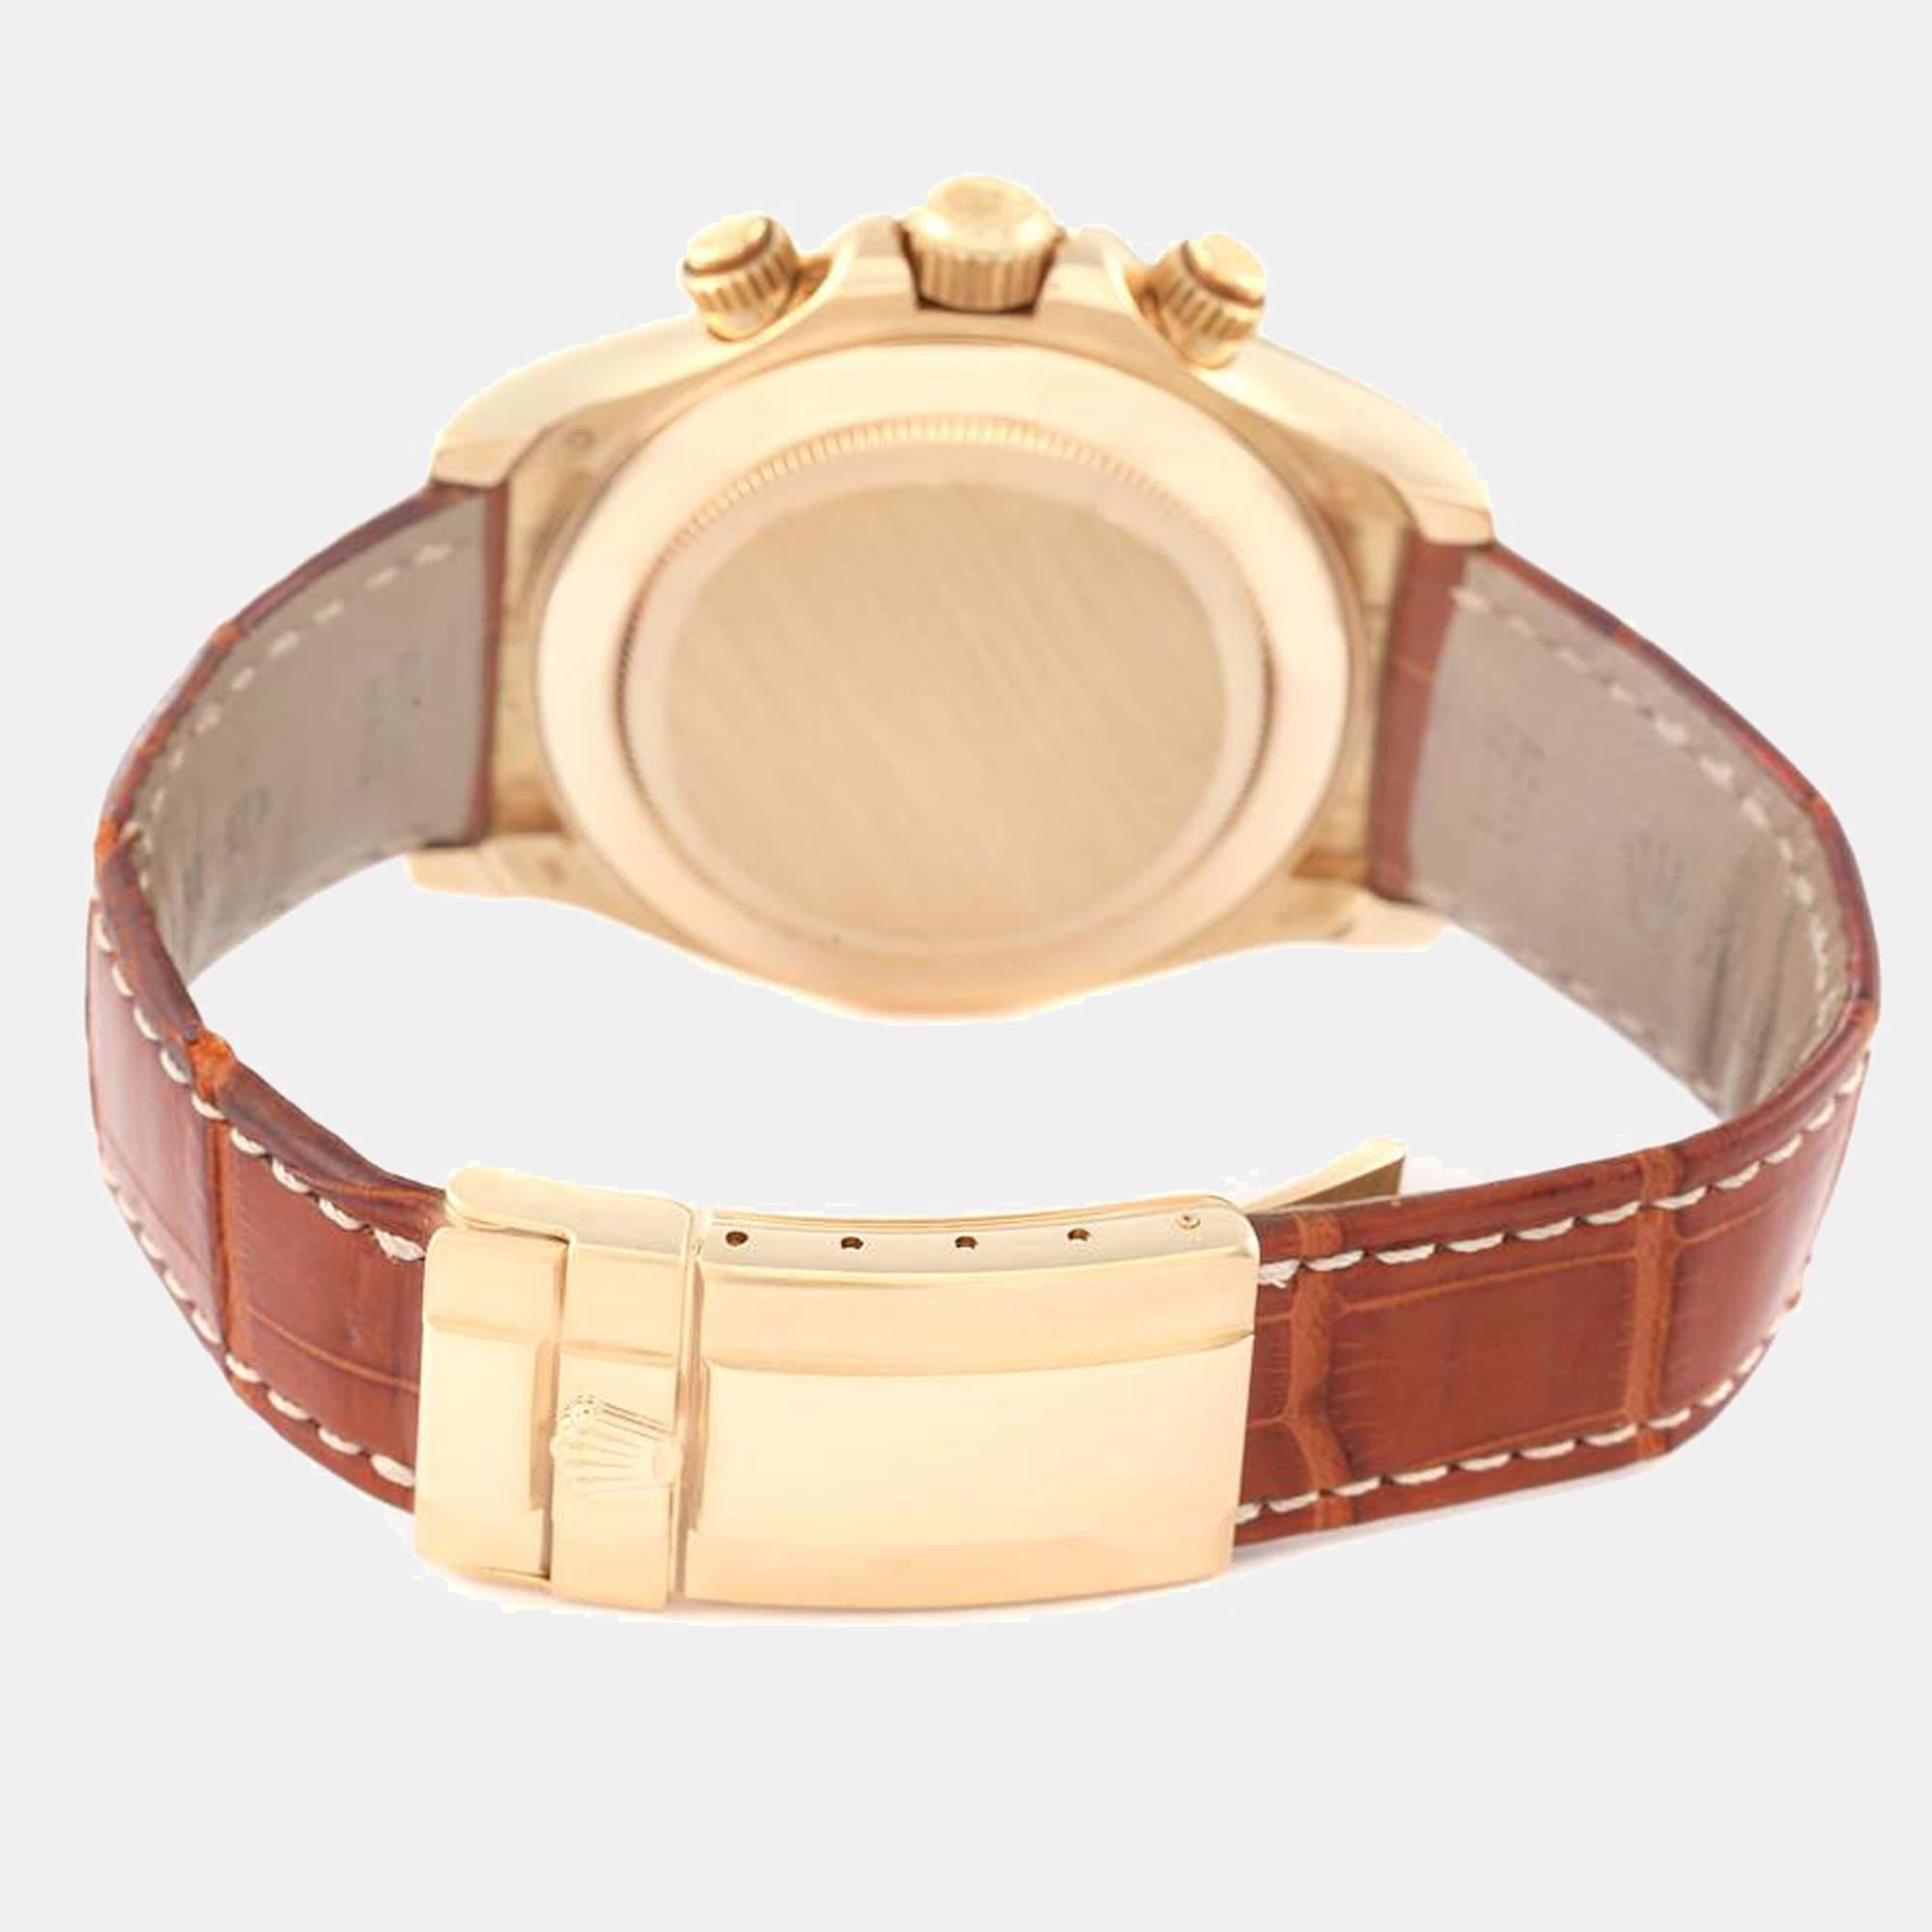 Rolex MOP 18K Yellow Gold Cosmograph Daytona 116518 Automatic Men's Wristwatch 4 For Sale 2